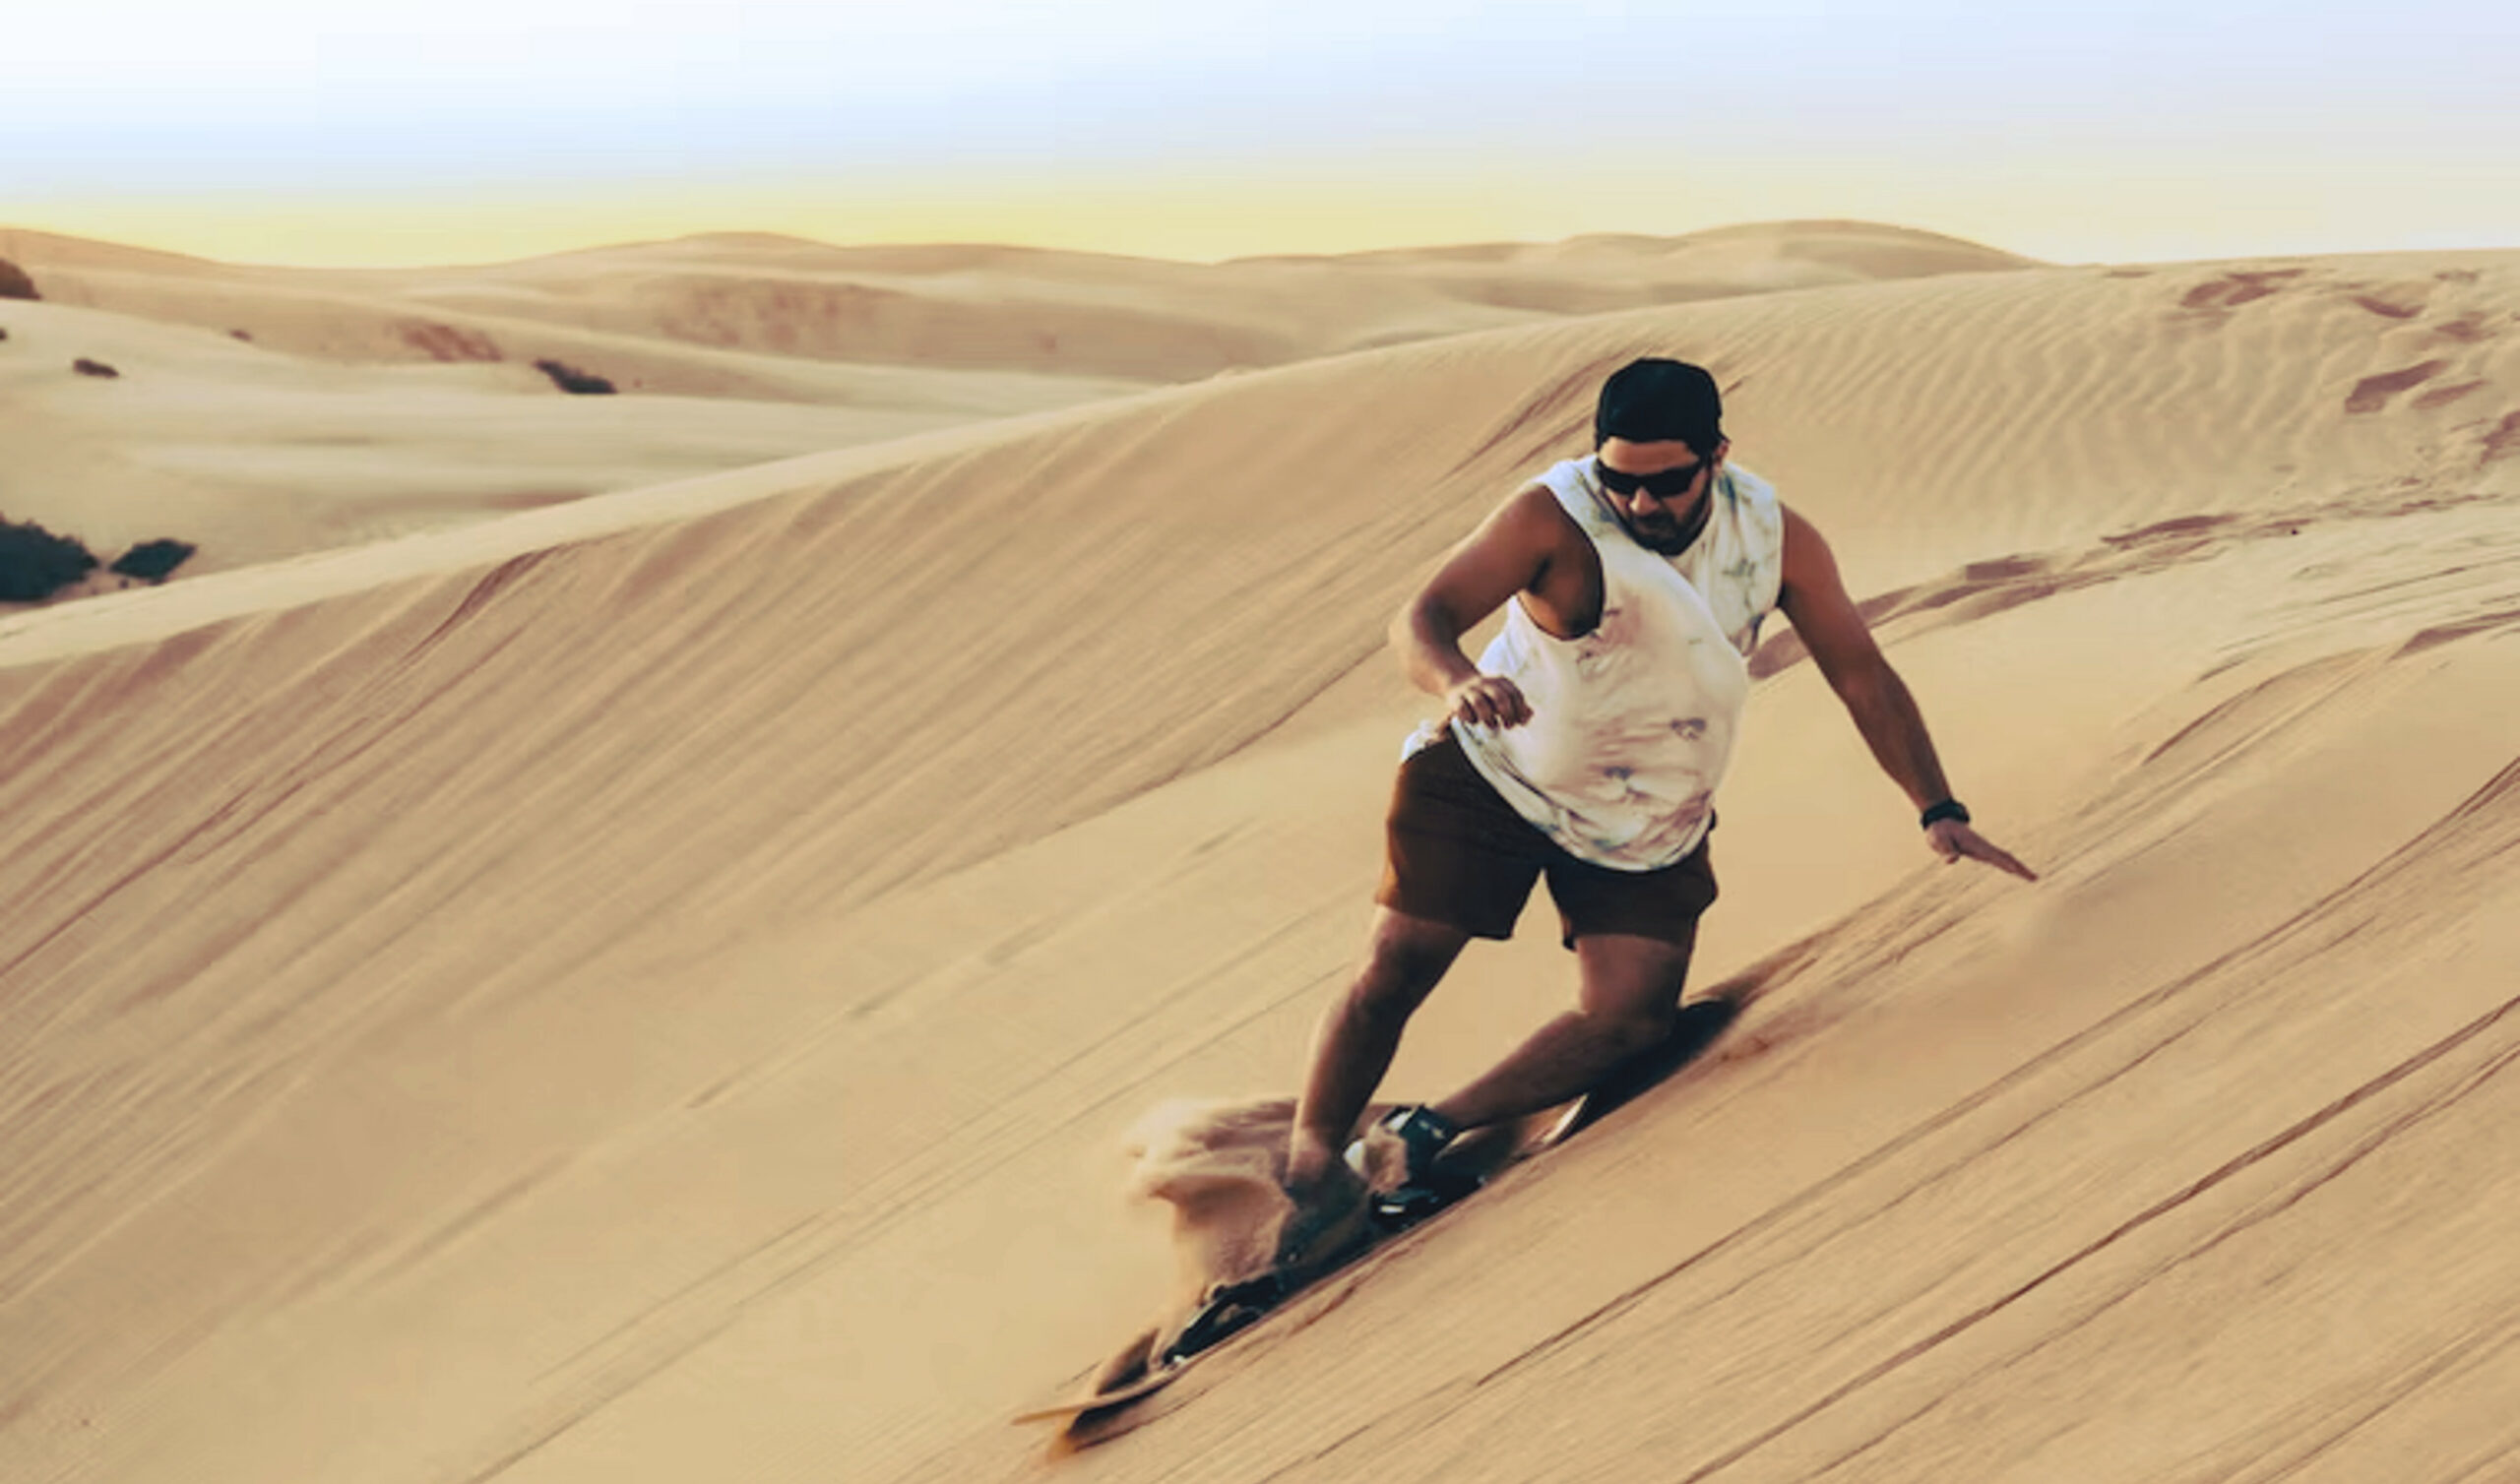 Man sandboarding on a dune in California, USA